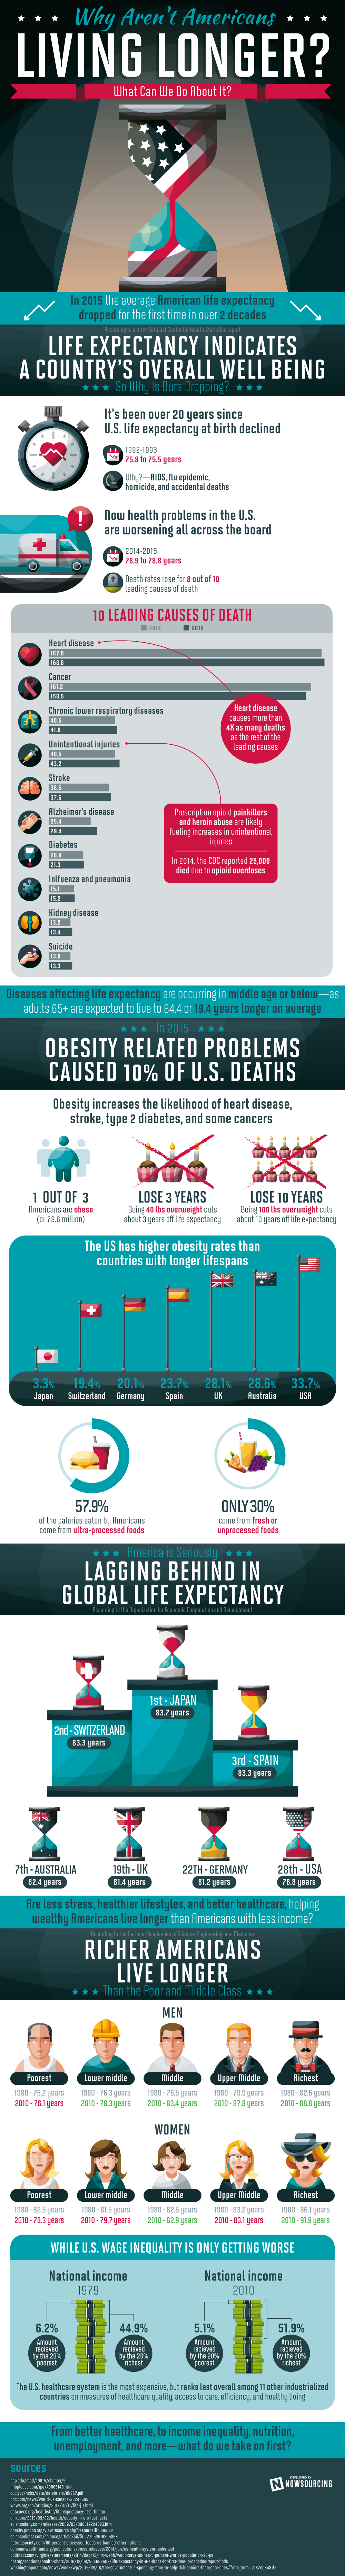 Why Aren't Americans Living Longer?